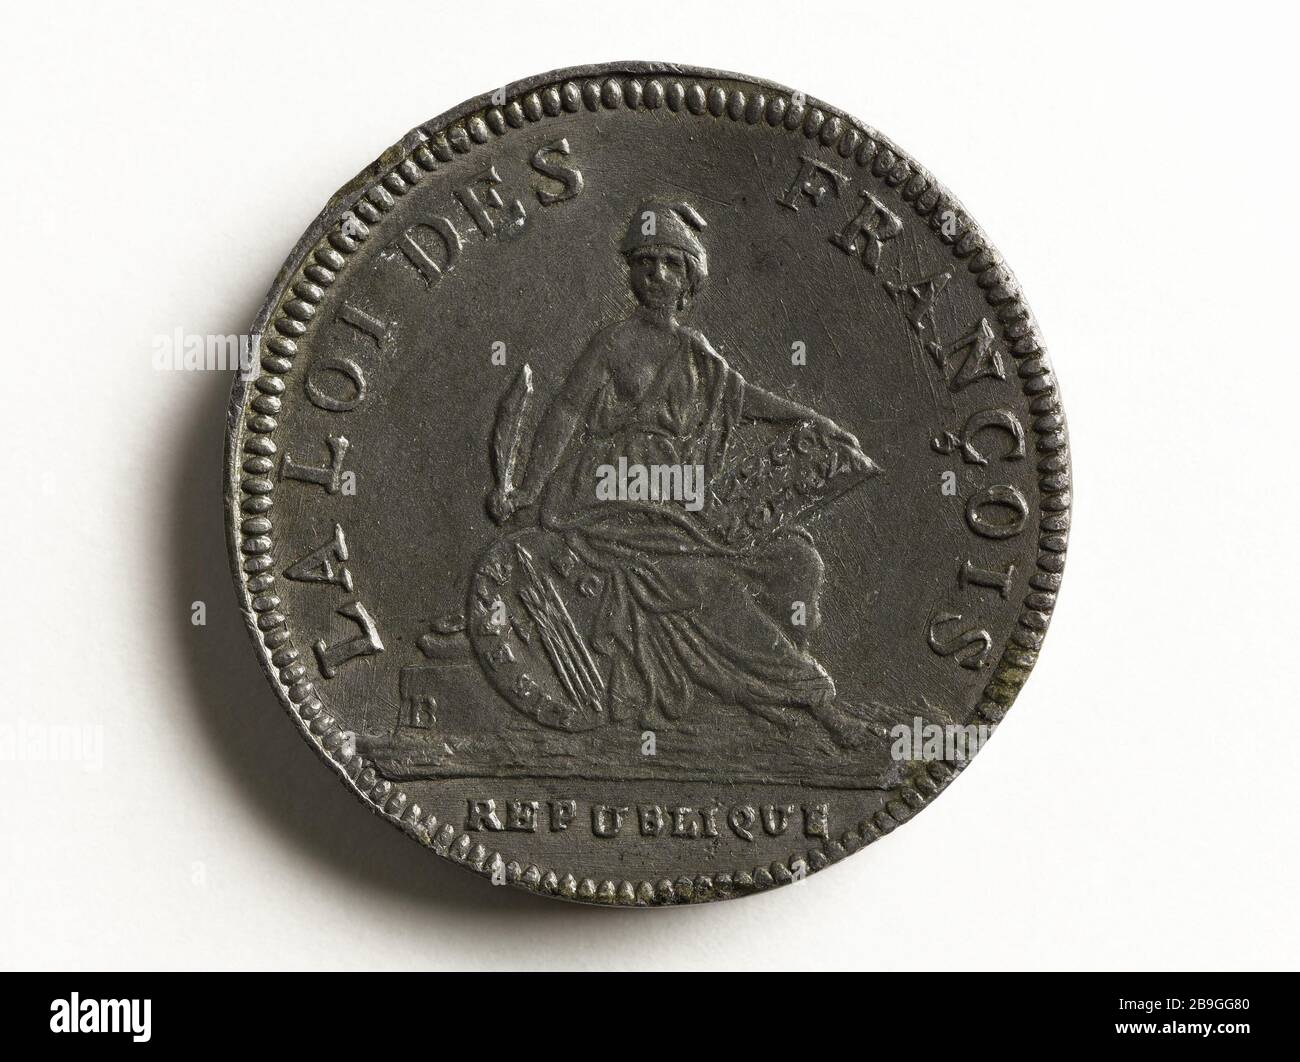 Musee de la monnaie hi-res stock photography and images - Alamy